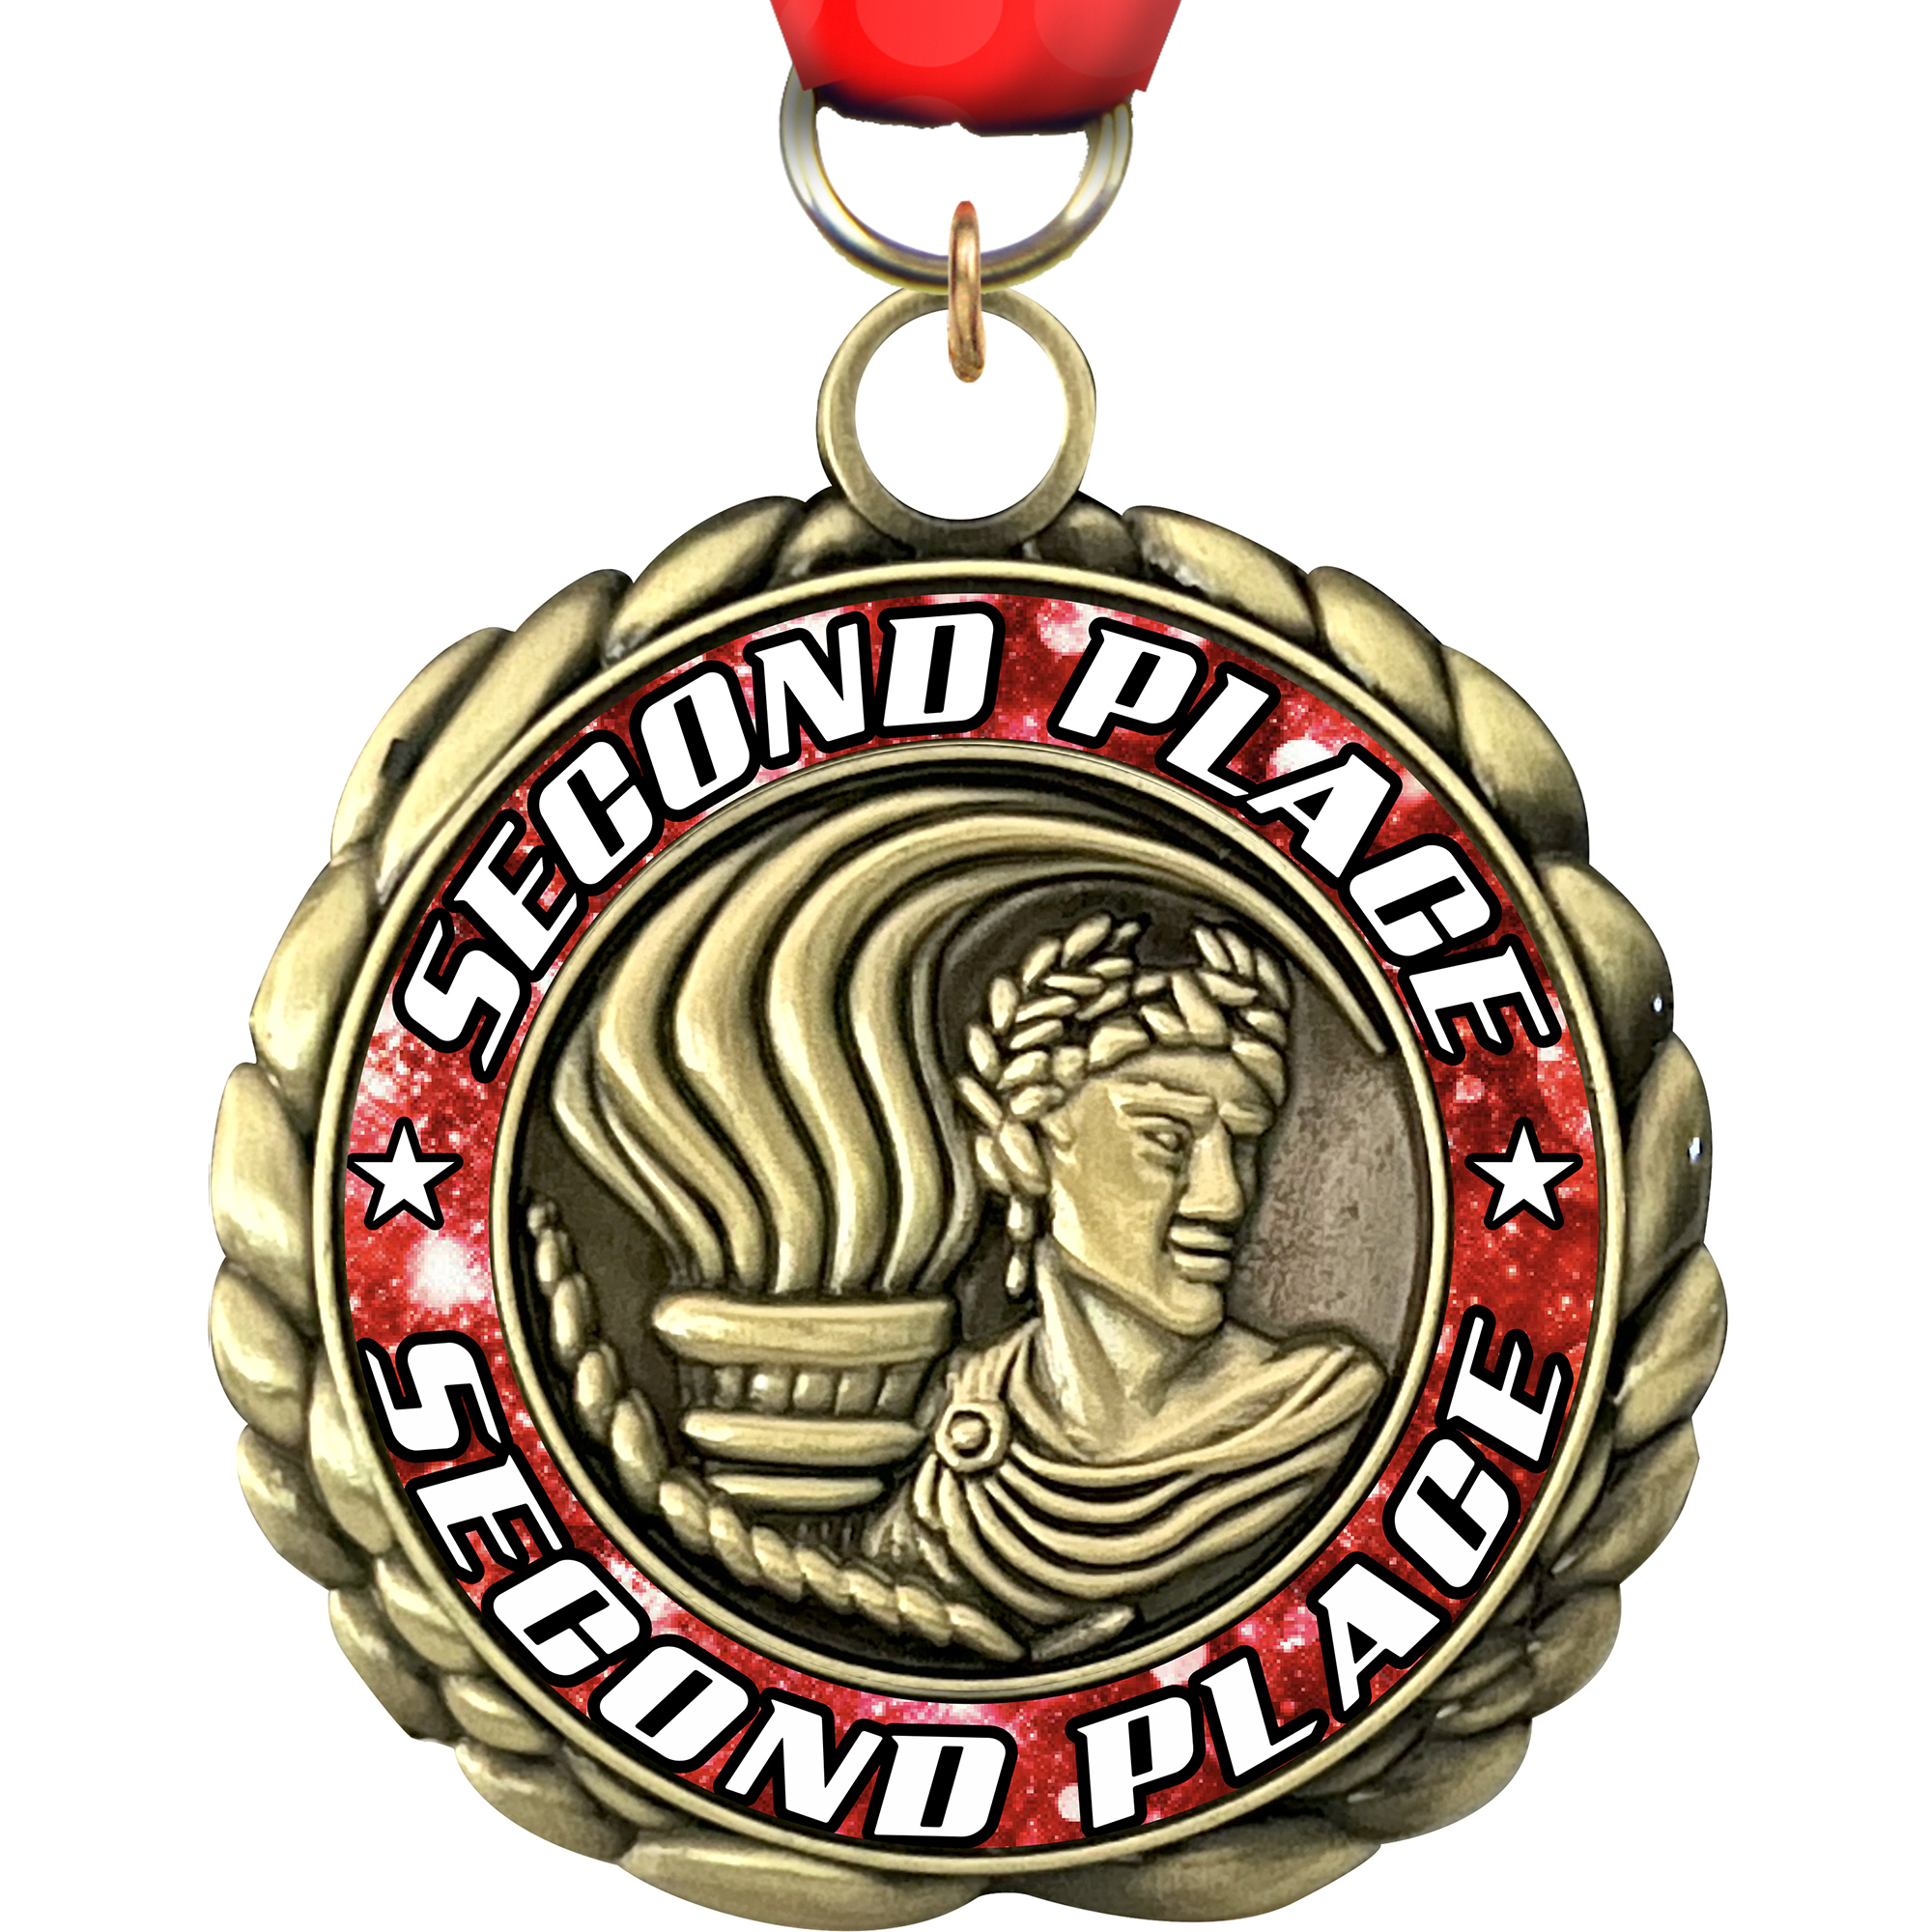 Place Wraparoundz Insert Medal